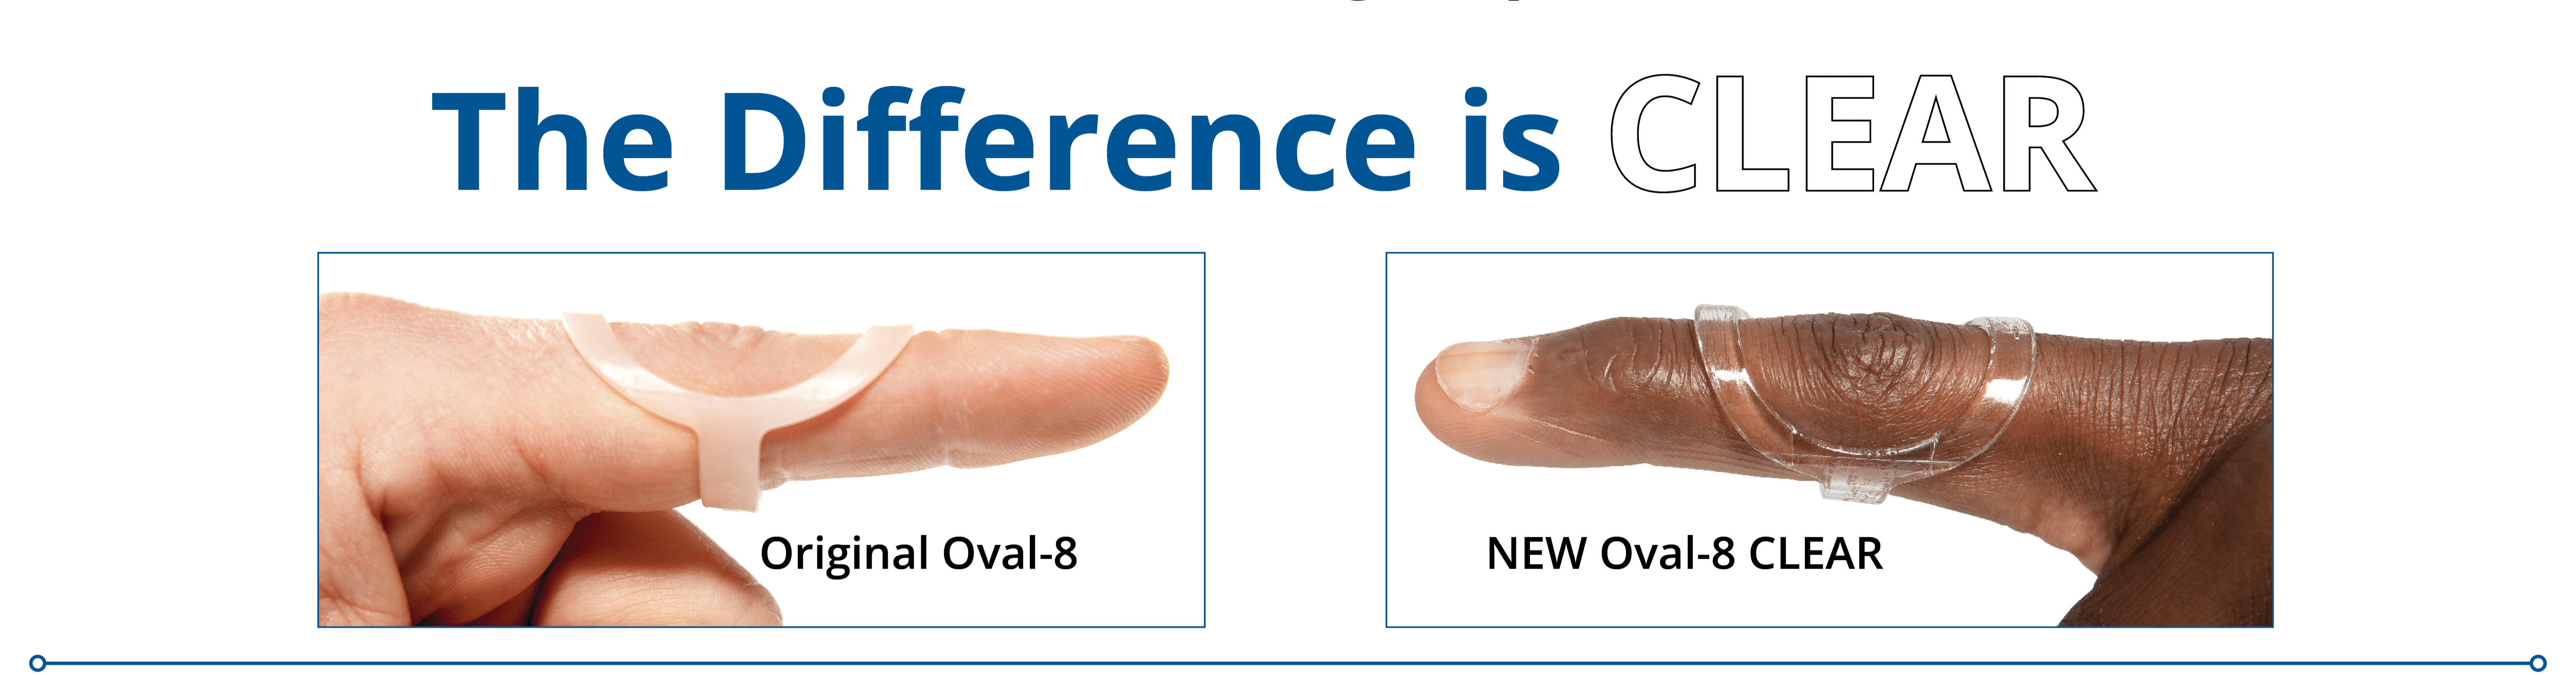 oval-8 clear finger splints translucent in color